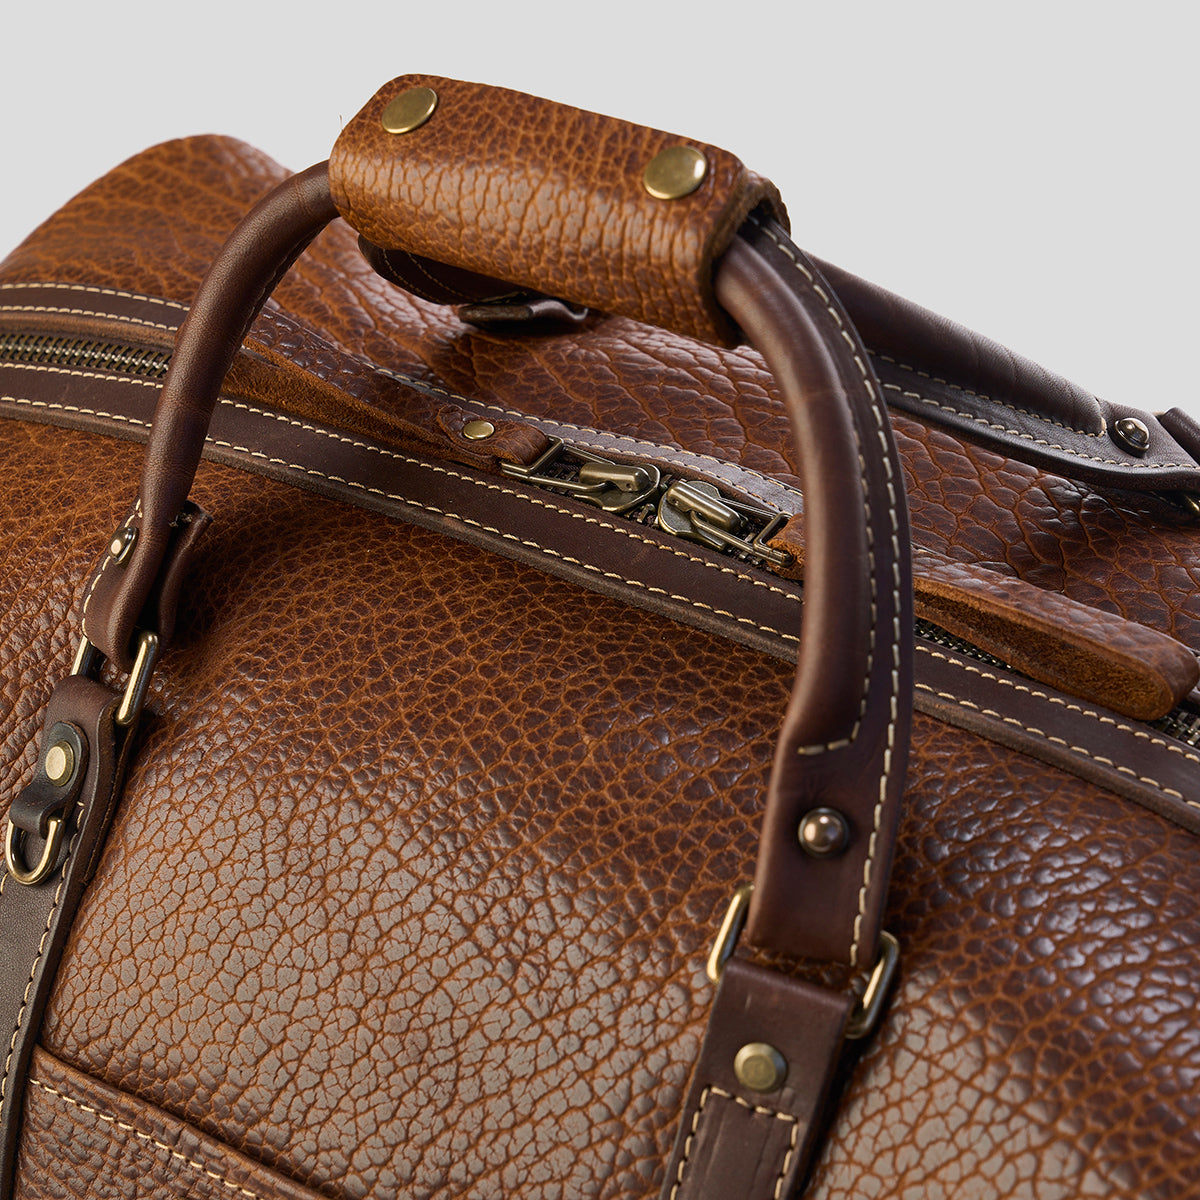 Bison Leather Dopp Bag - Shaving or Toiletry Travel Bag - Hanks Belts